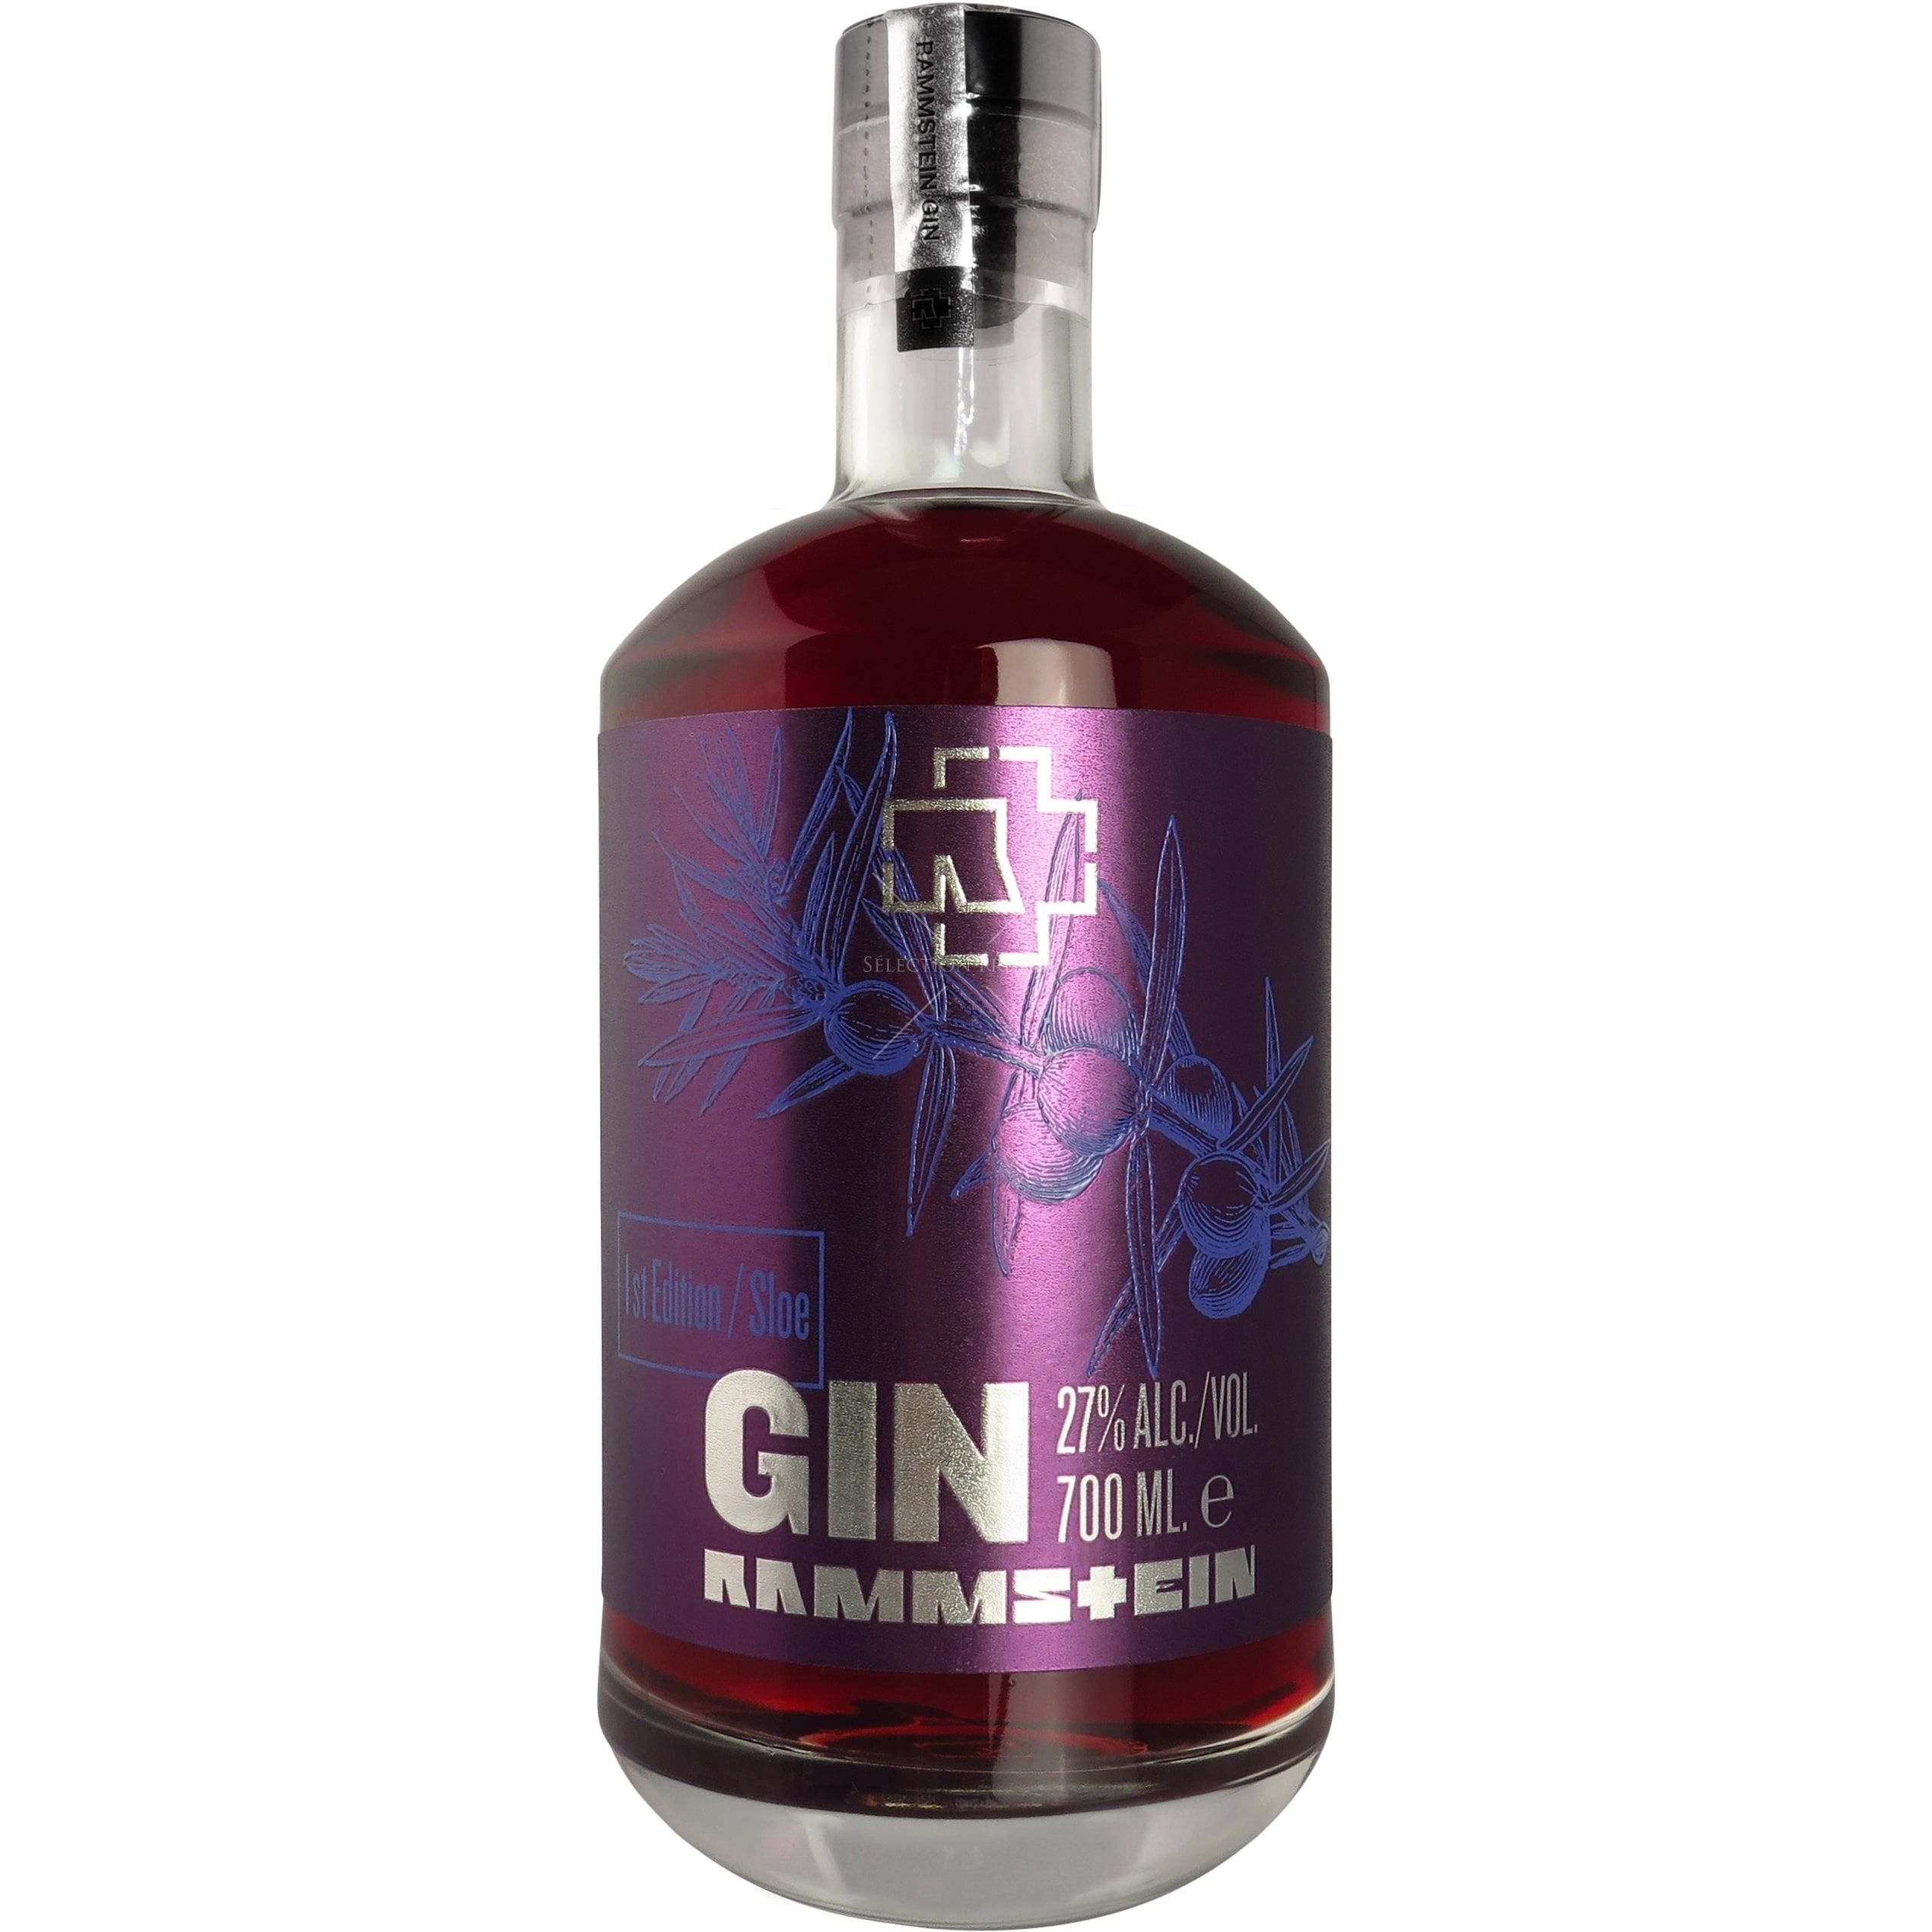 Rammstein Sloe Gin Limited Edition 27% Vol. 0,7l